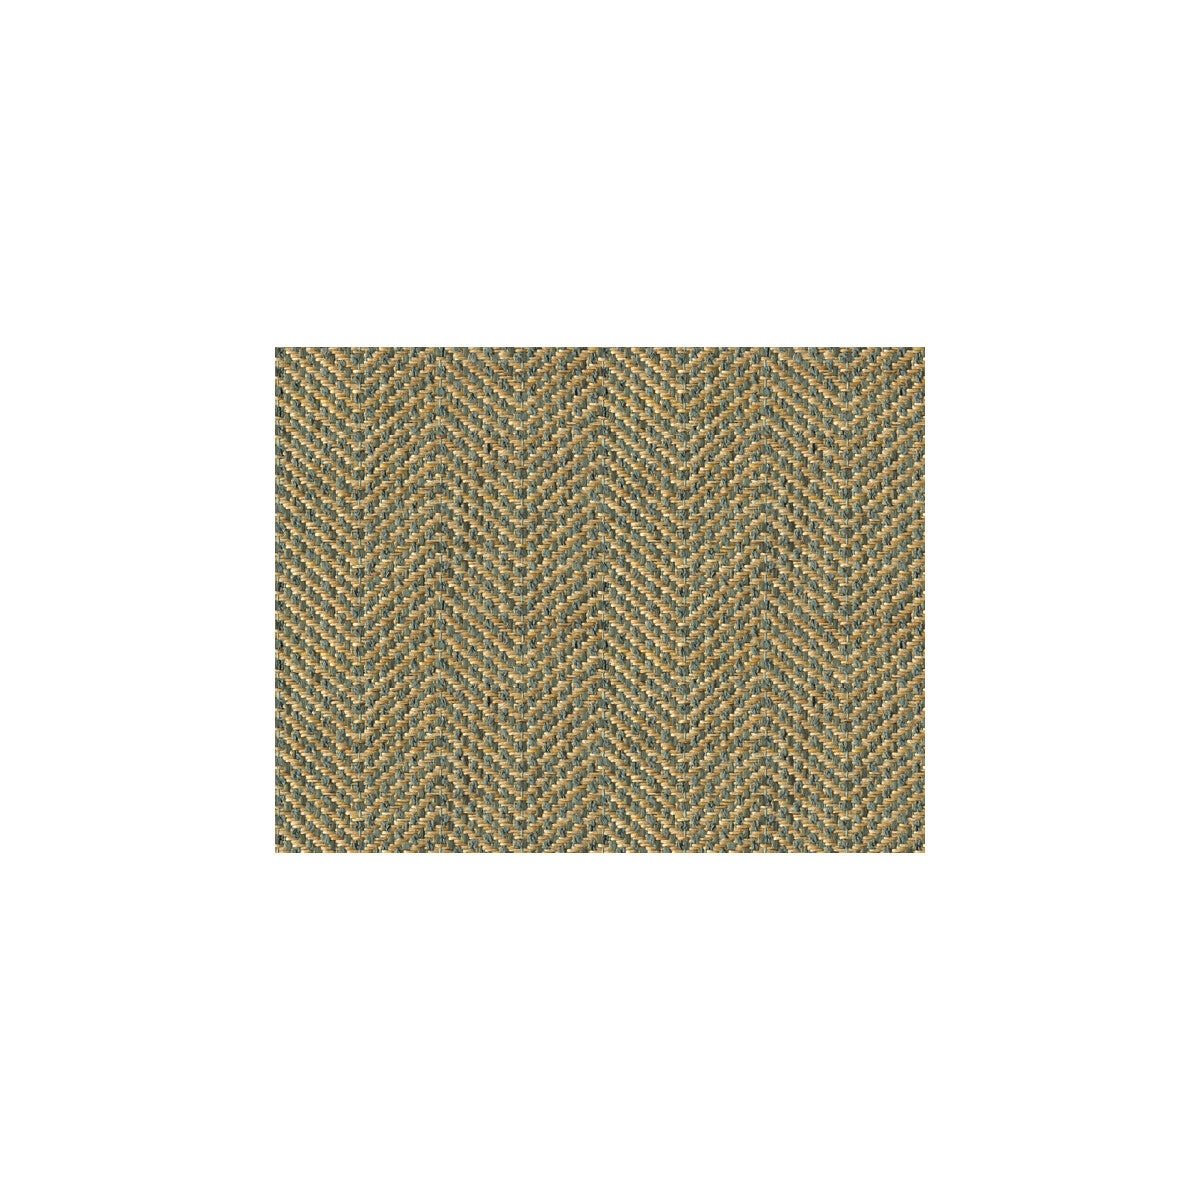 Kravet Smart fabric in 31748-1615 color - pattern 31748.1615.0 - by Kravet Smart